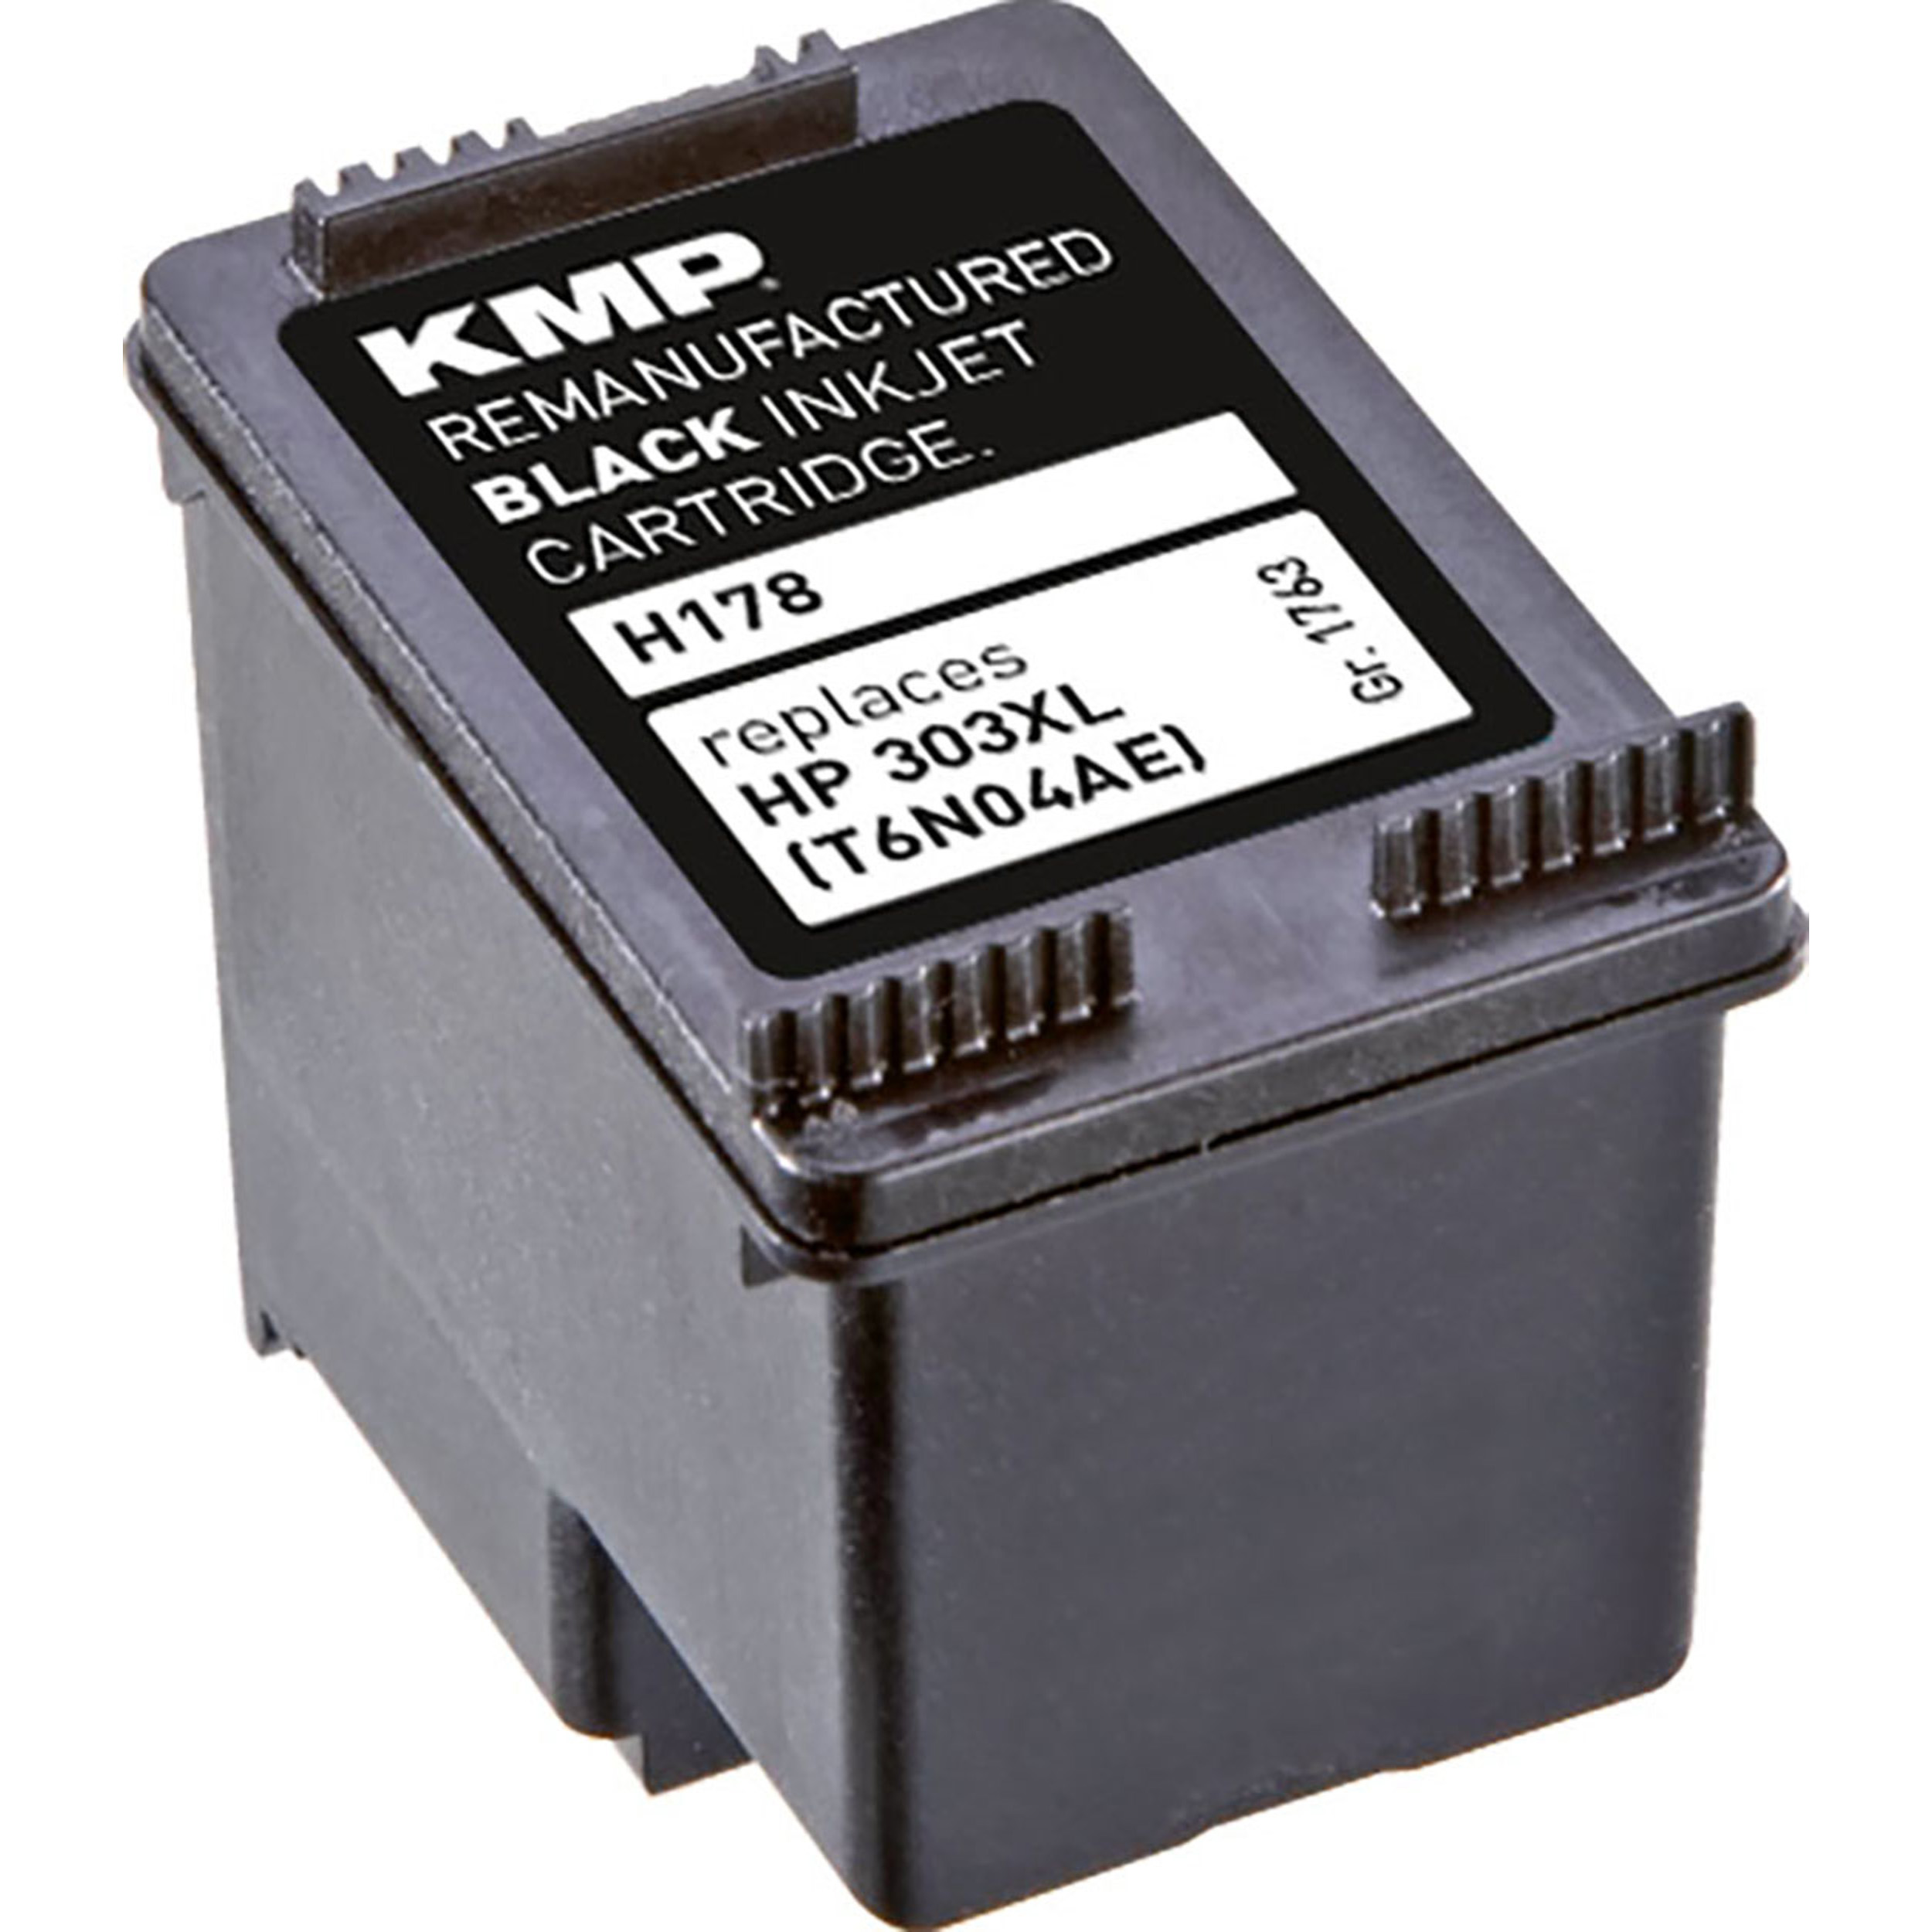 KMP Tintenpatrone für HP 303XL Cartridge Black (T6N04AE) (T6N04AE) Ink black